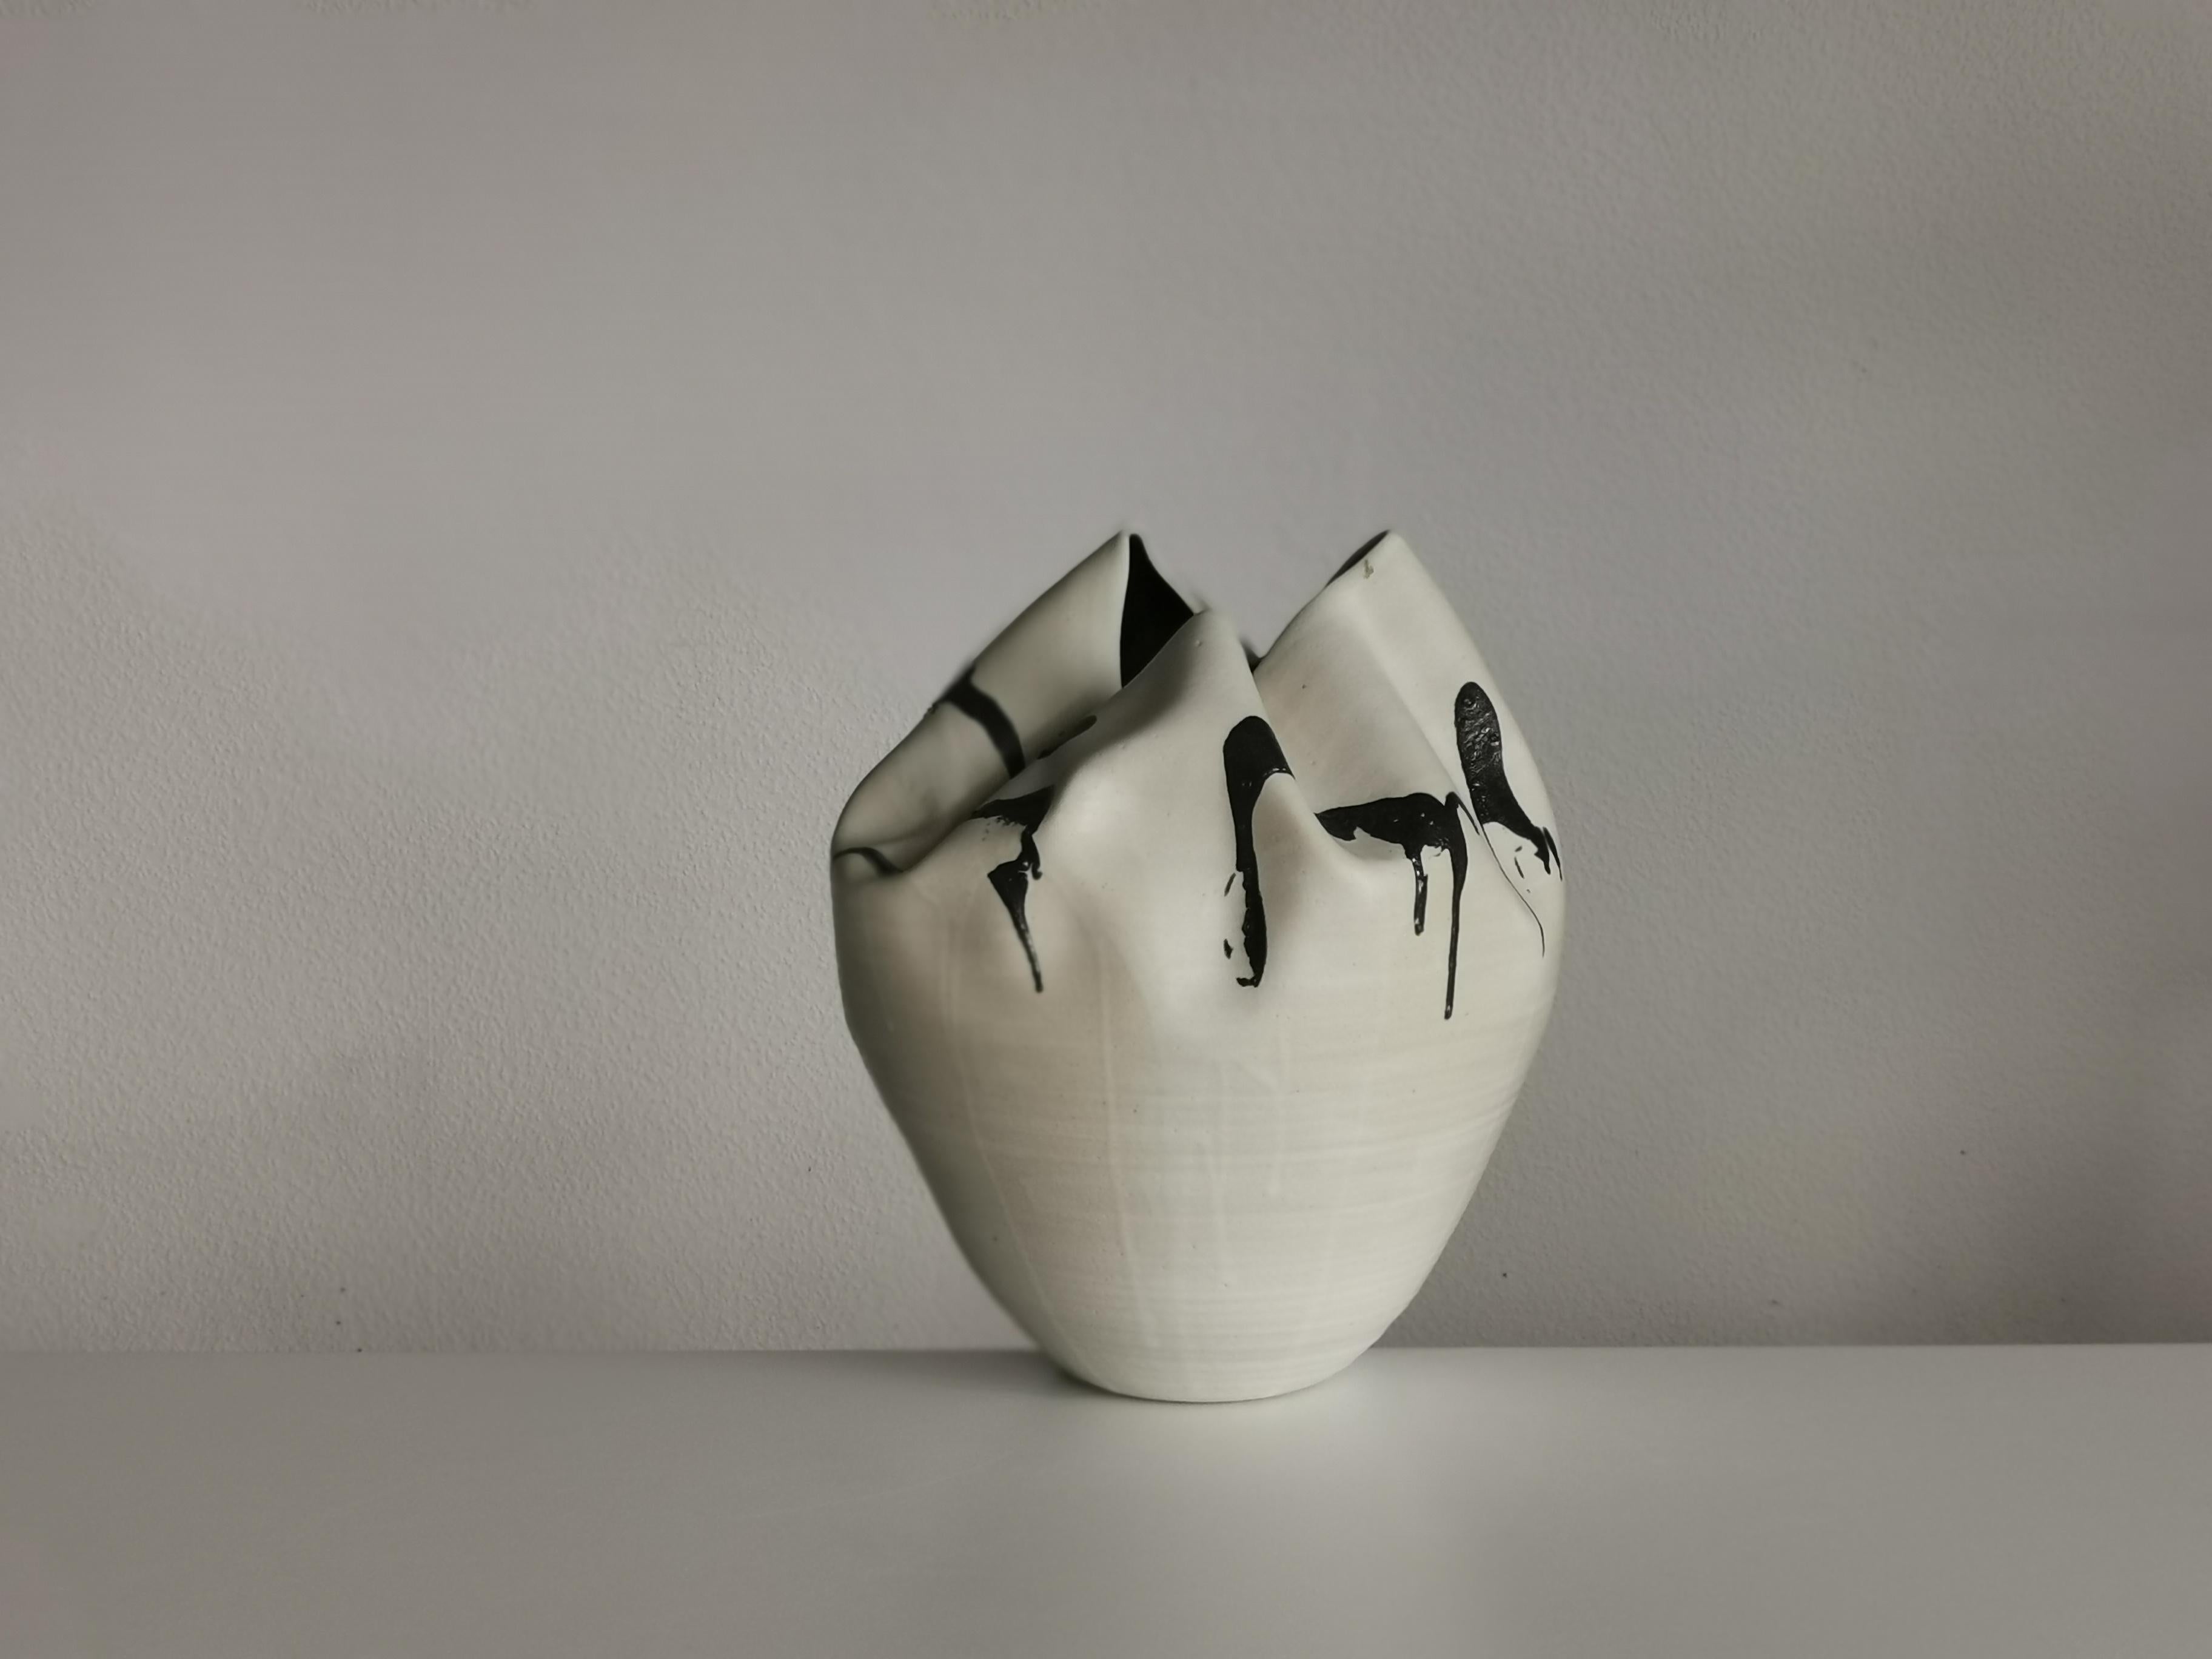 Clay White Undulating Form Expressive Markings, Unique Ceramic Sculpture Vessel N.79